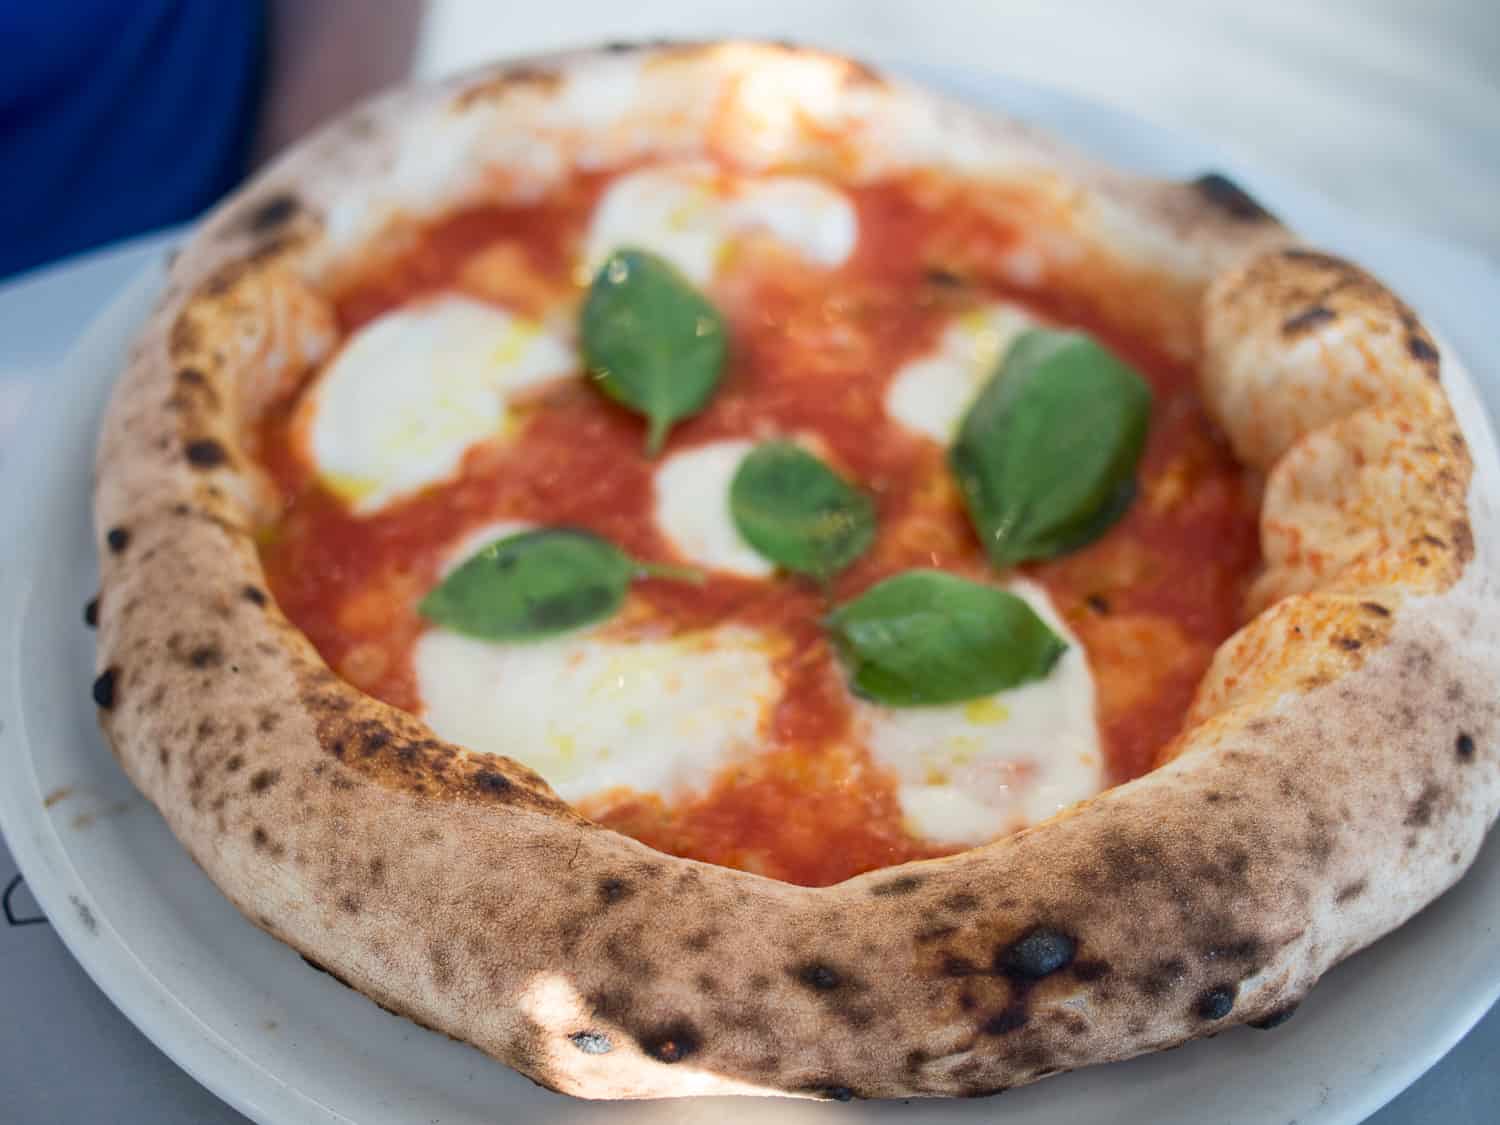 Neapolitan style pizza at Seu Pizza Illuminati in Trastevere, Rome, Italy